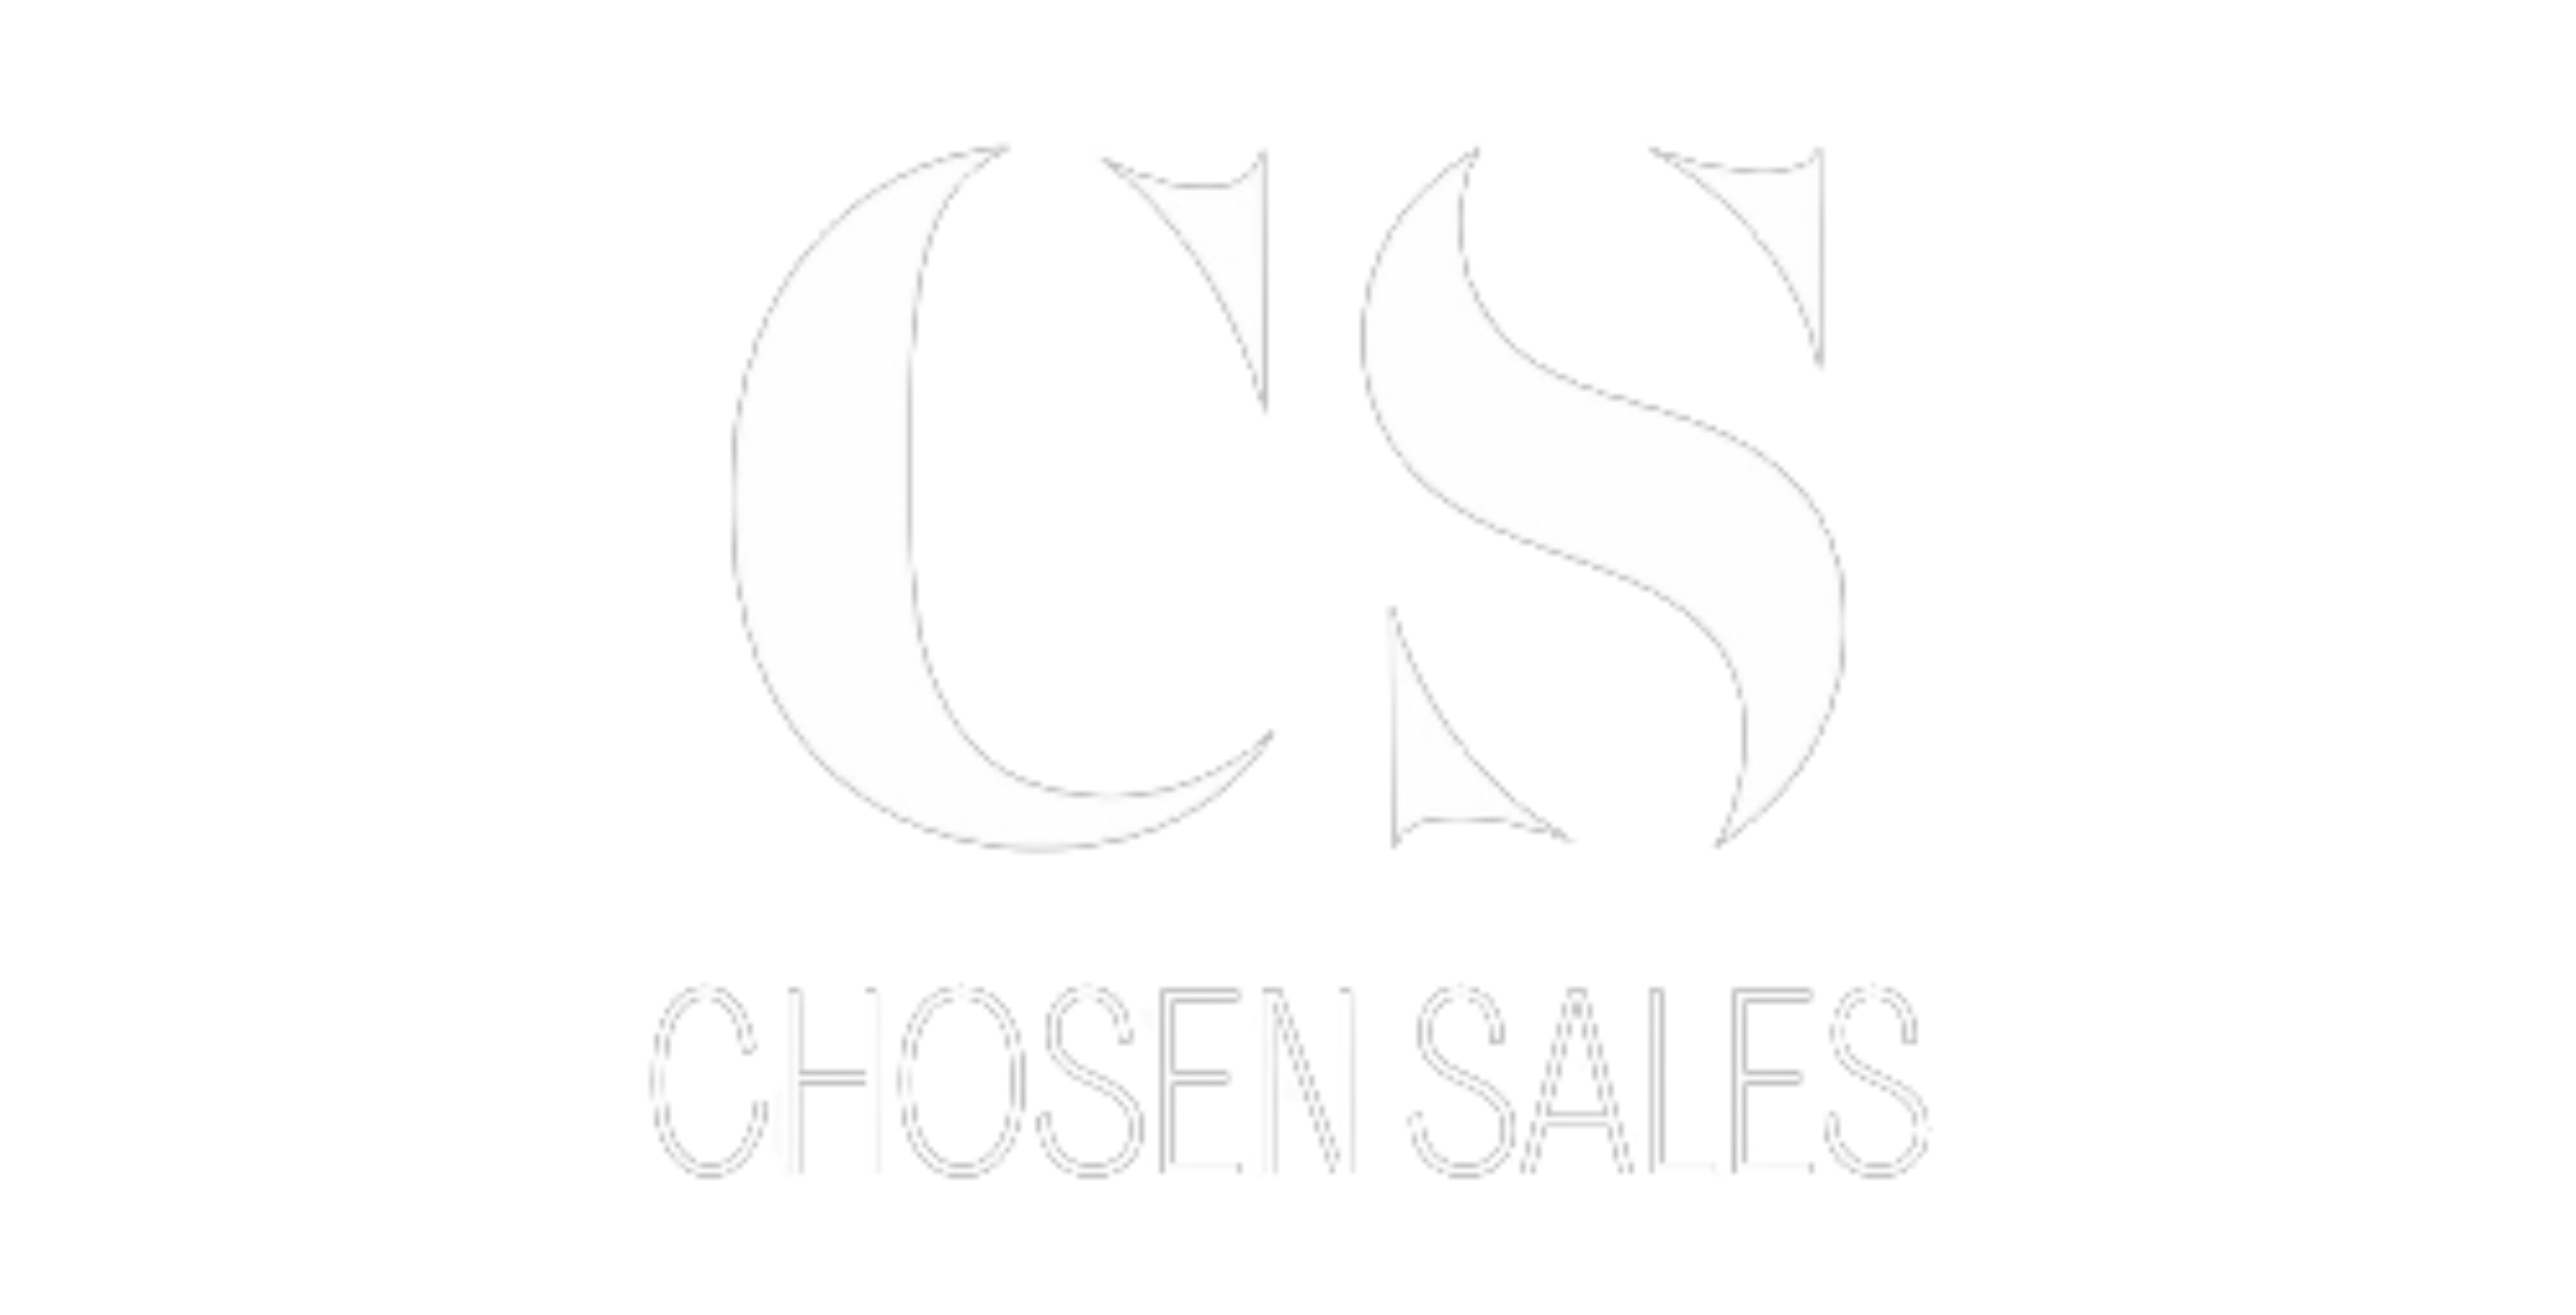 Chosen sales logo